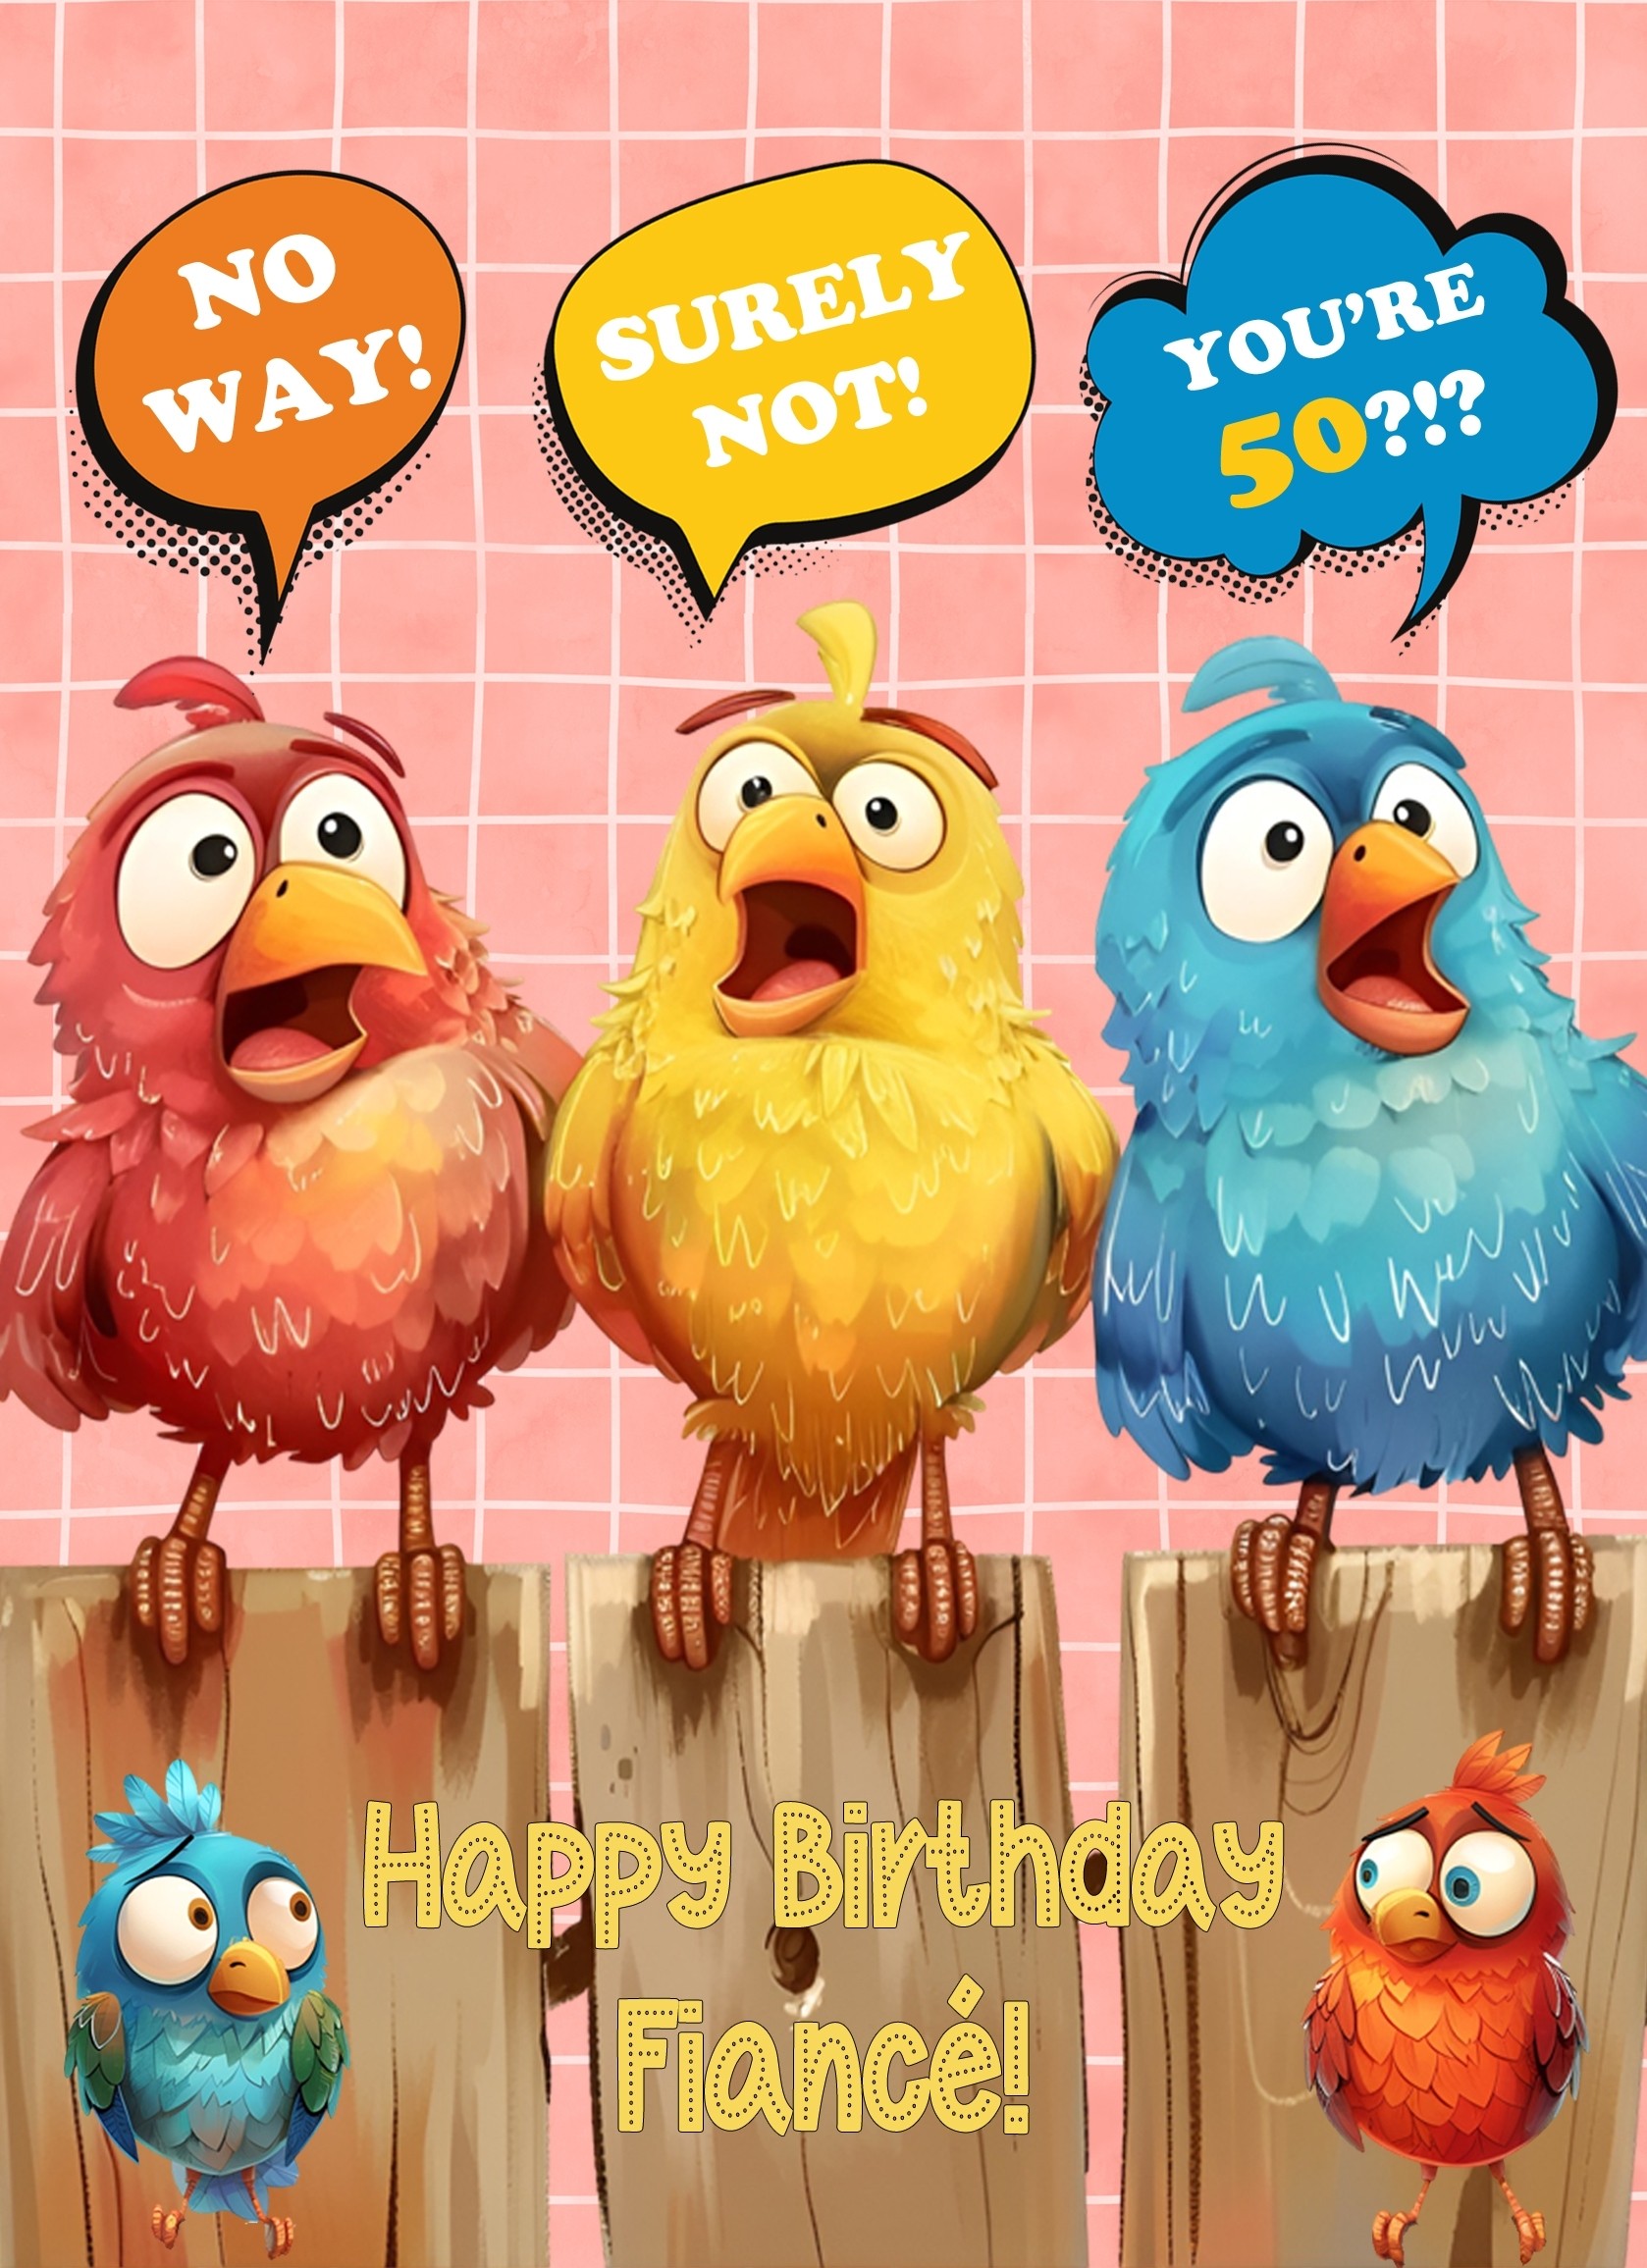 Fiance 50th Birthday Card (Funny Birds Surprised)